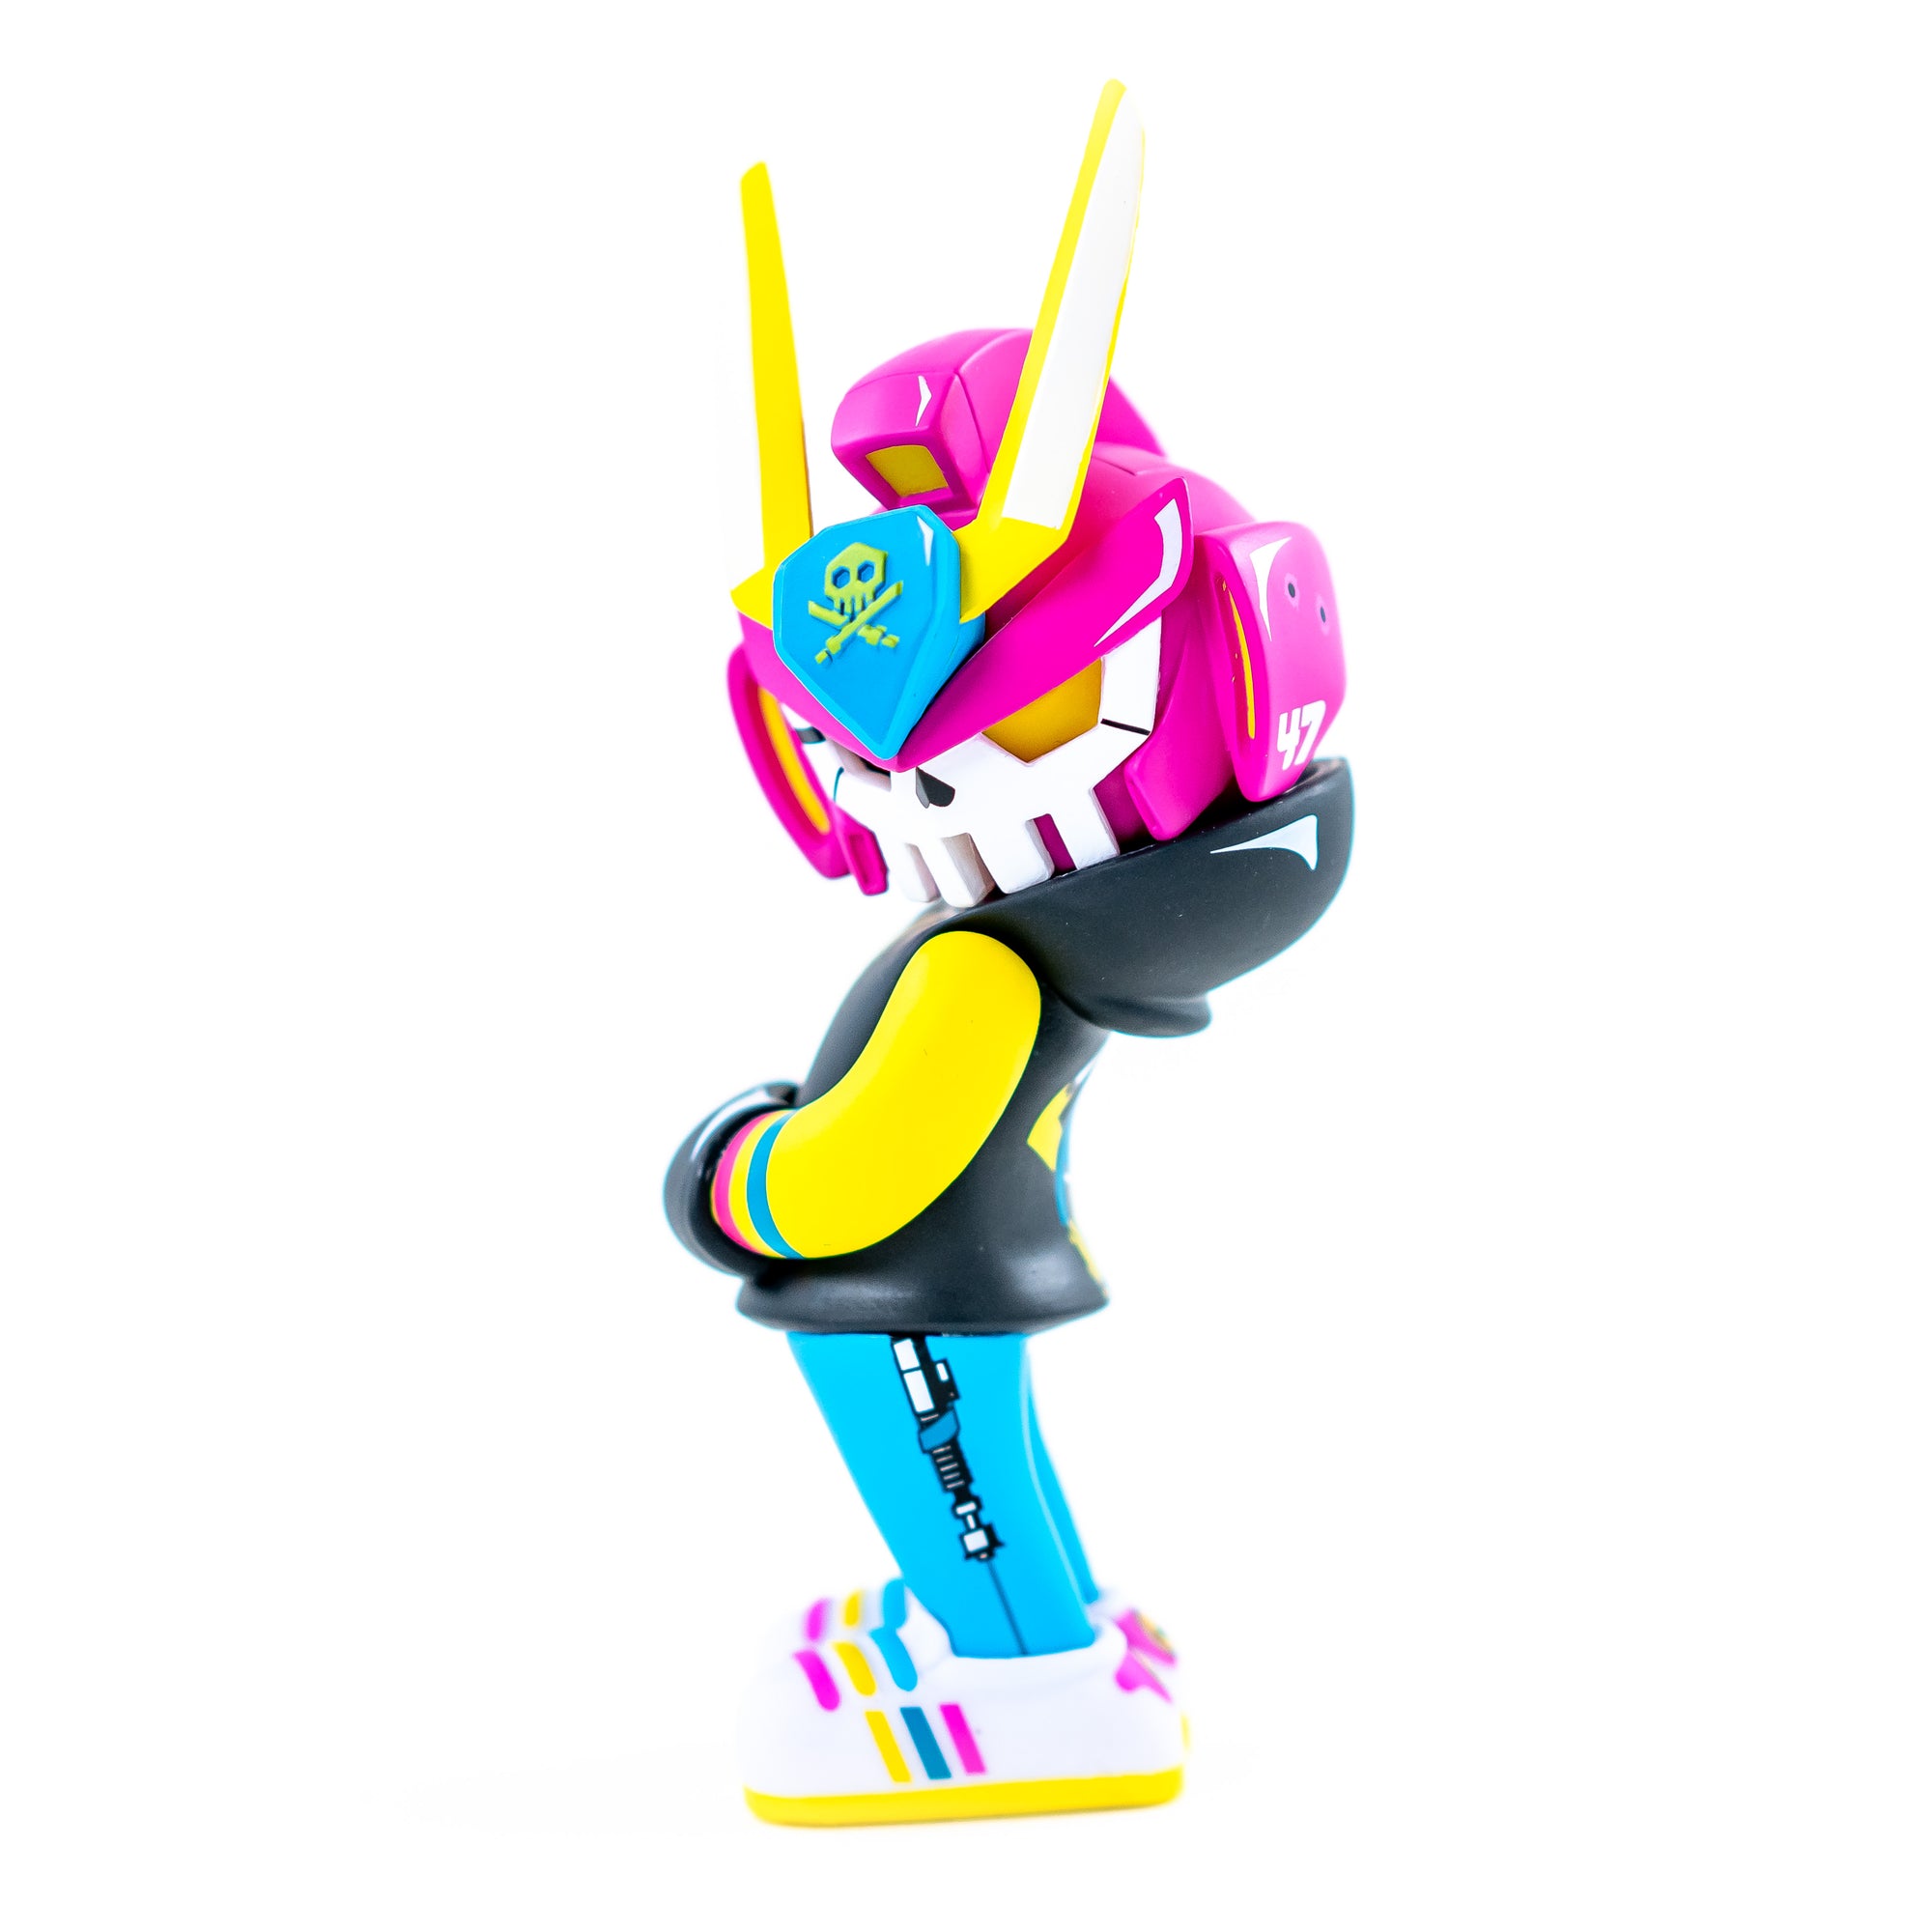 Pirateq-47 Neo-Tokyo Pink TEQ 63 Toy Figure by Quiccs x SergAndDestroy